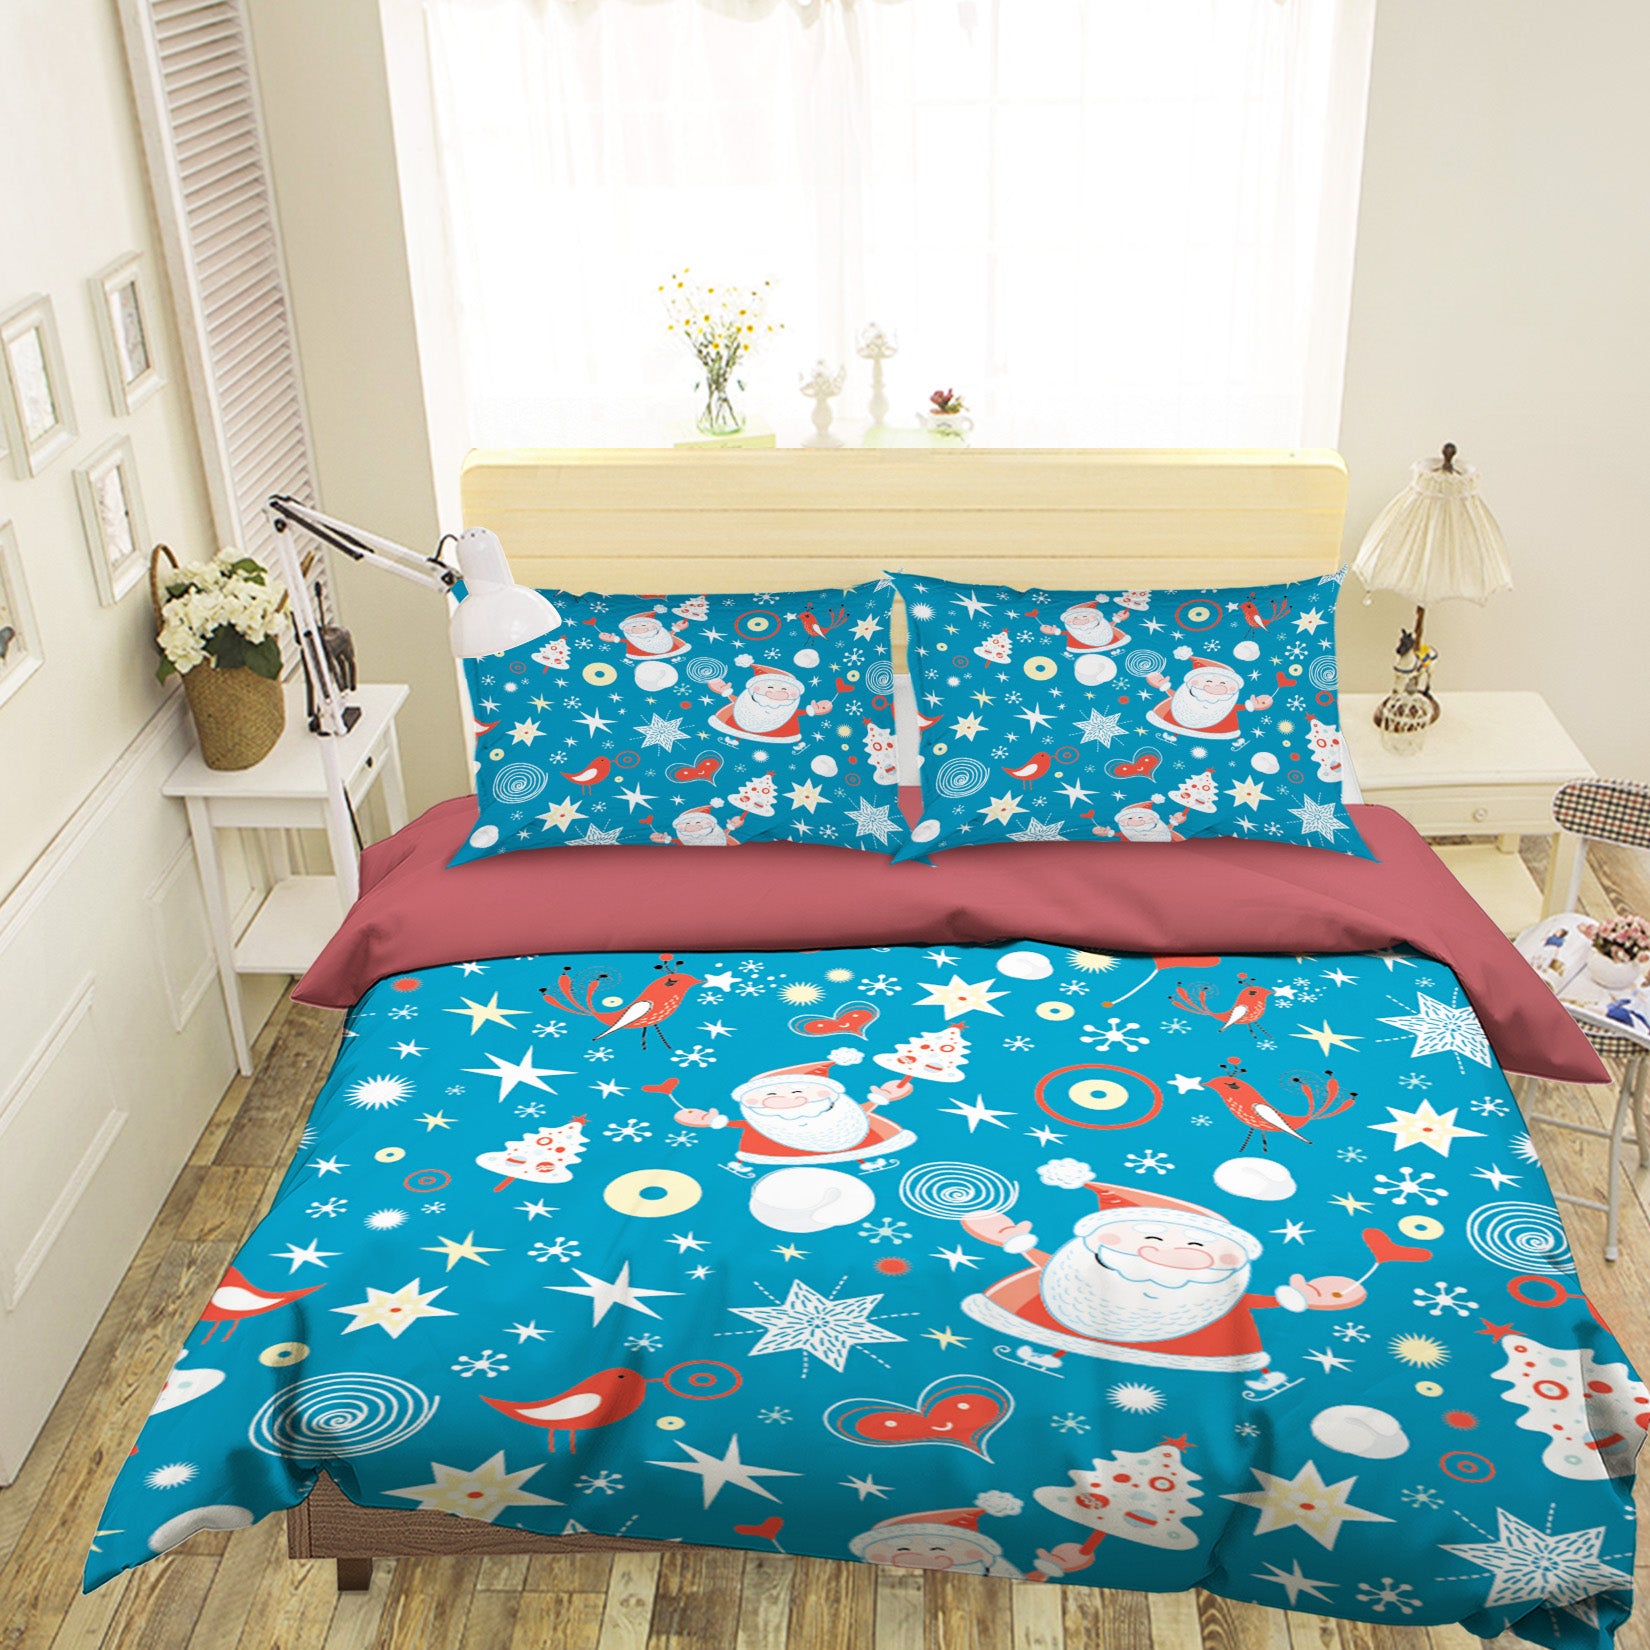 3D Santa Claus Pattern 31132 Christmas Quilt Duvet Cover Xmas Bed Pillowcases